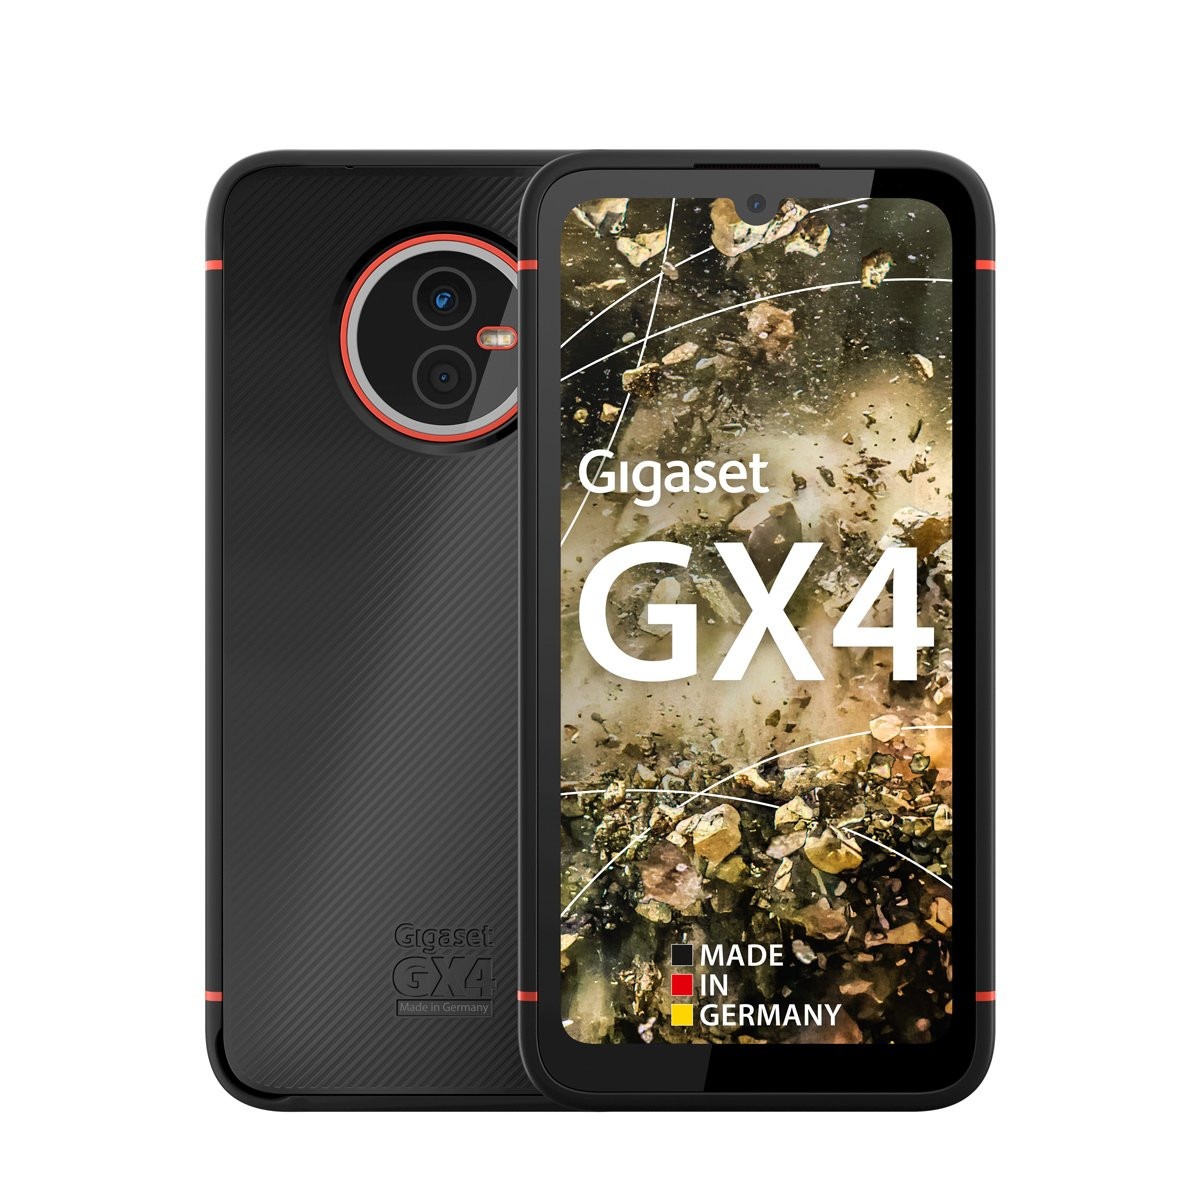 Gigaset GX4 - 64GB Smartphone Zwart aanbieding